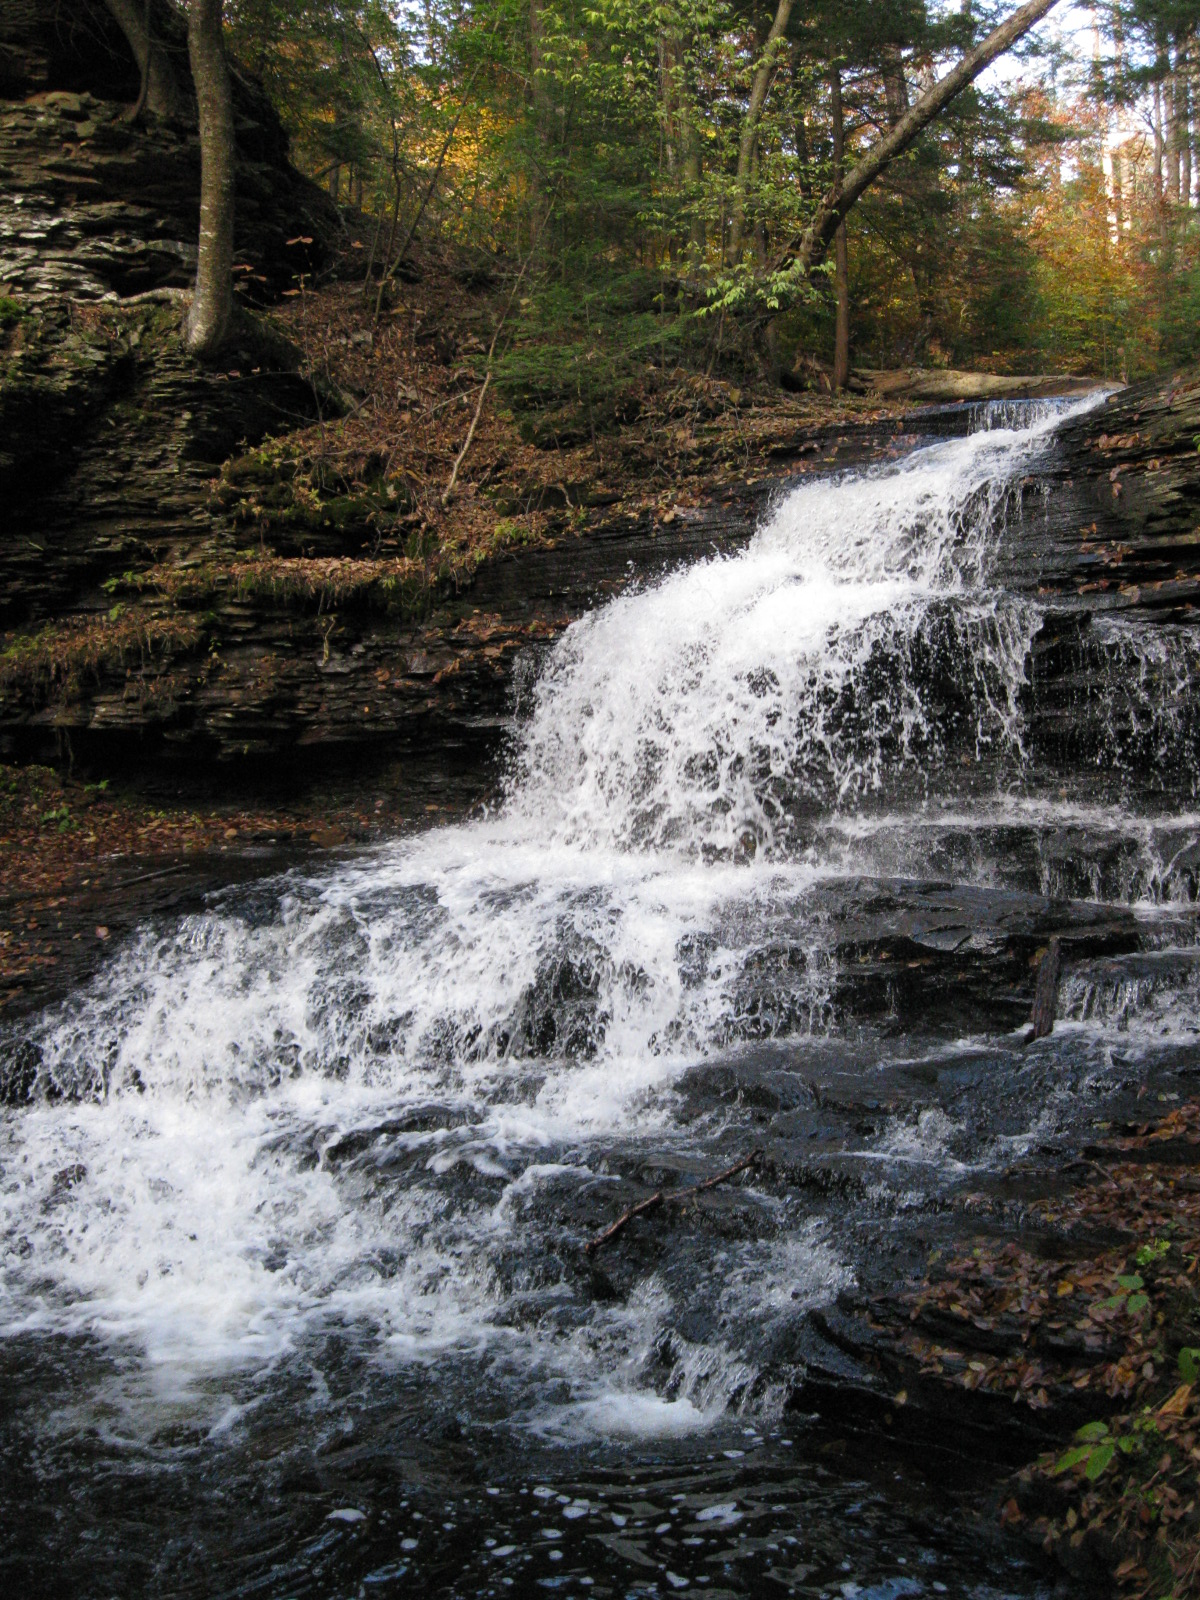 File:Ricketts Glen State Park Onondaga Falls 6.jpg - Wikimedia Commons